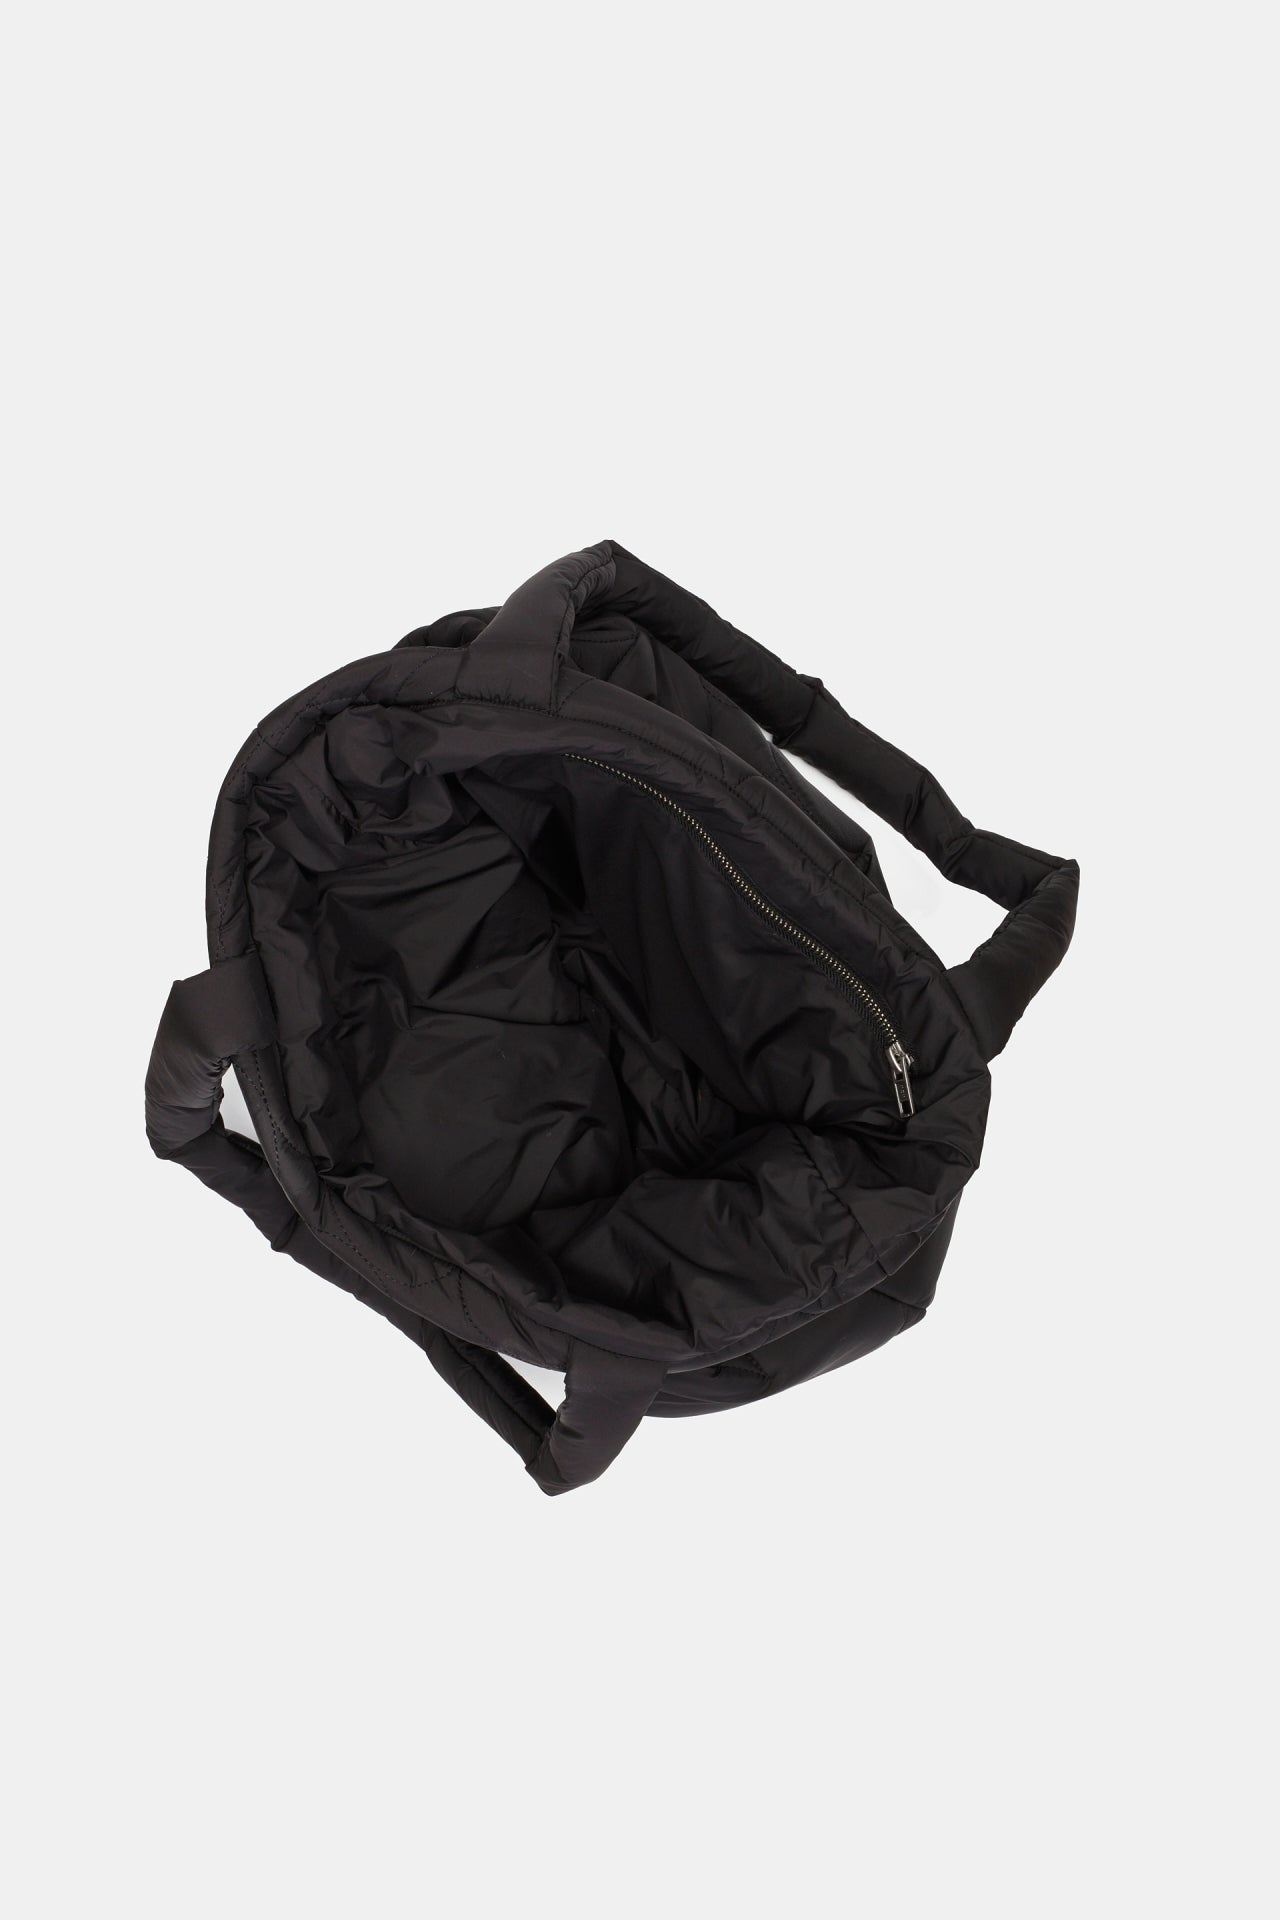 Prisca Tote Bag | Black